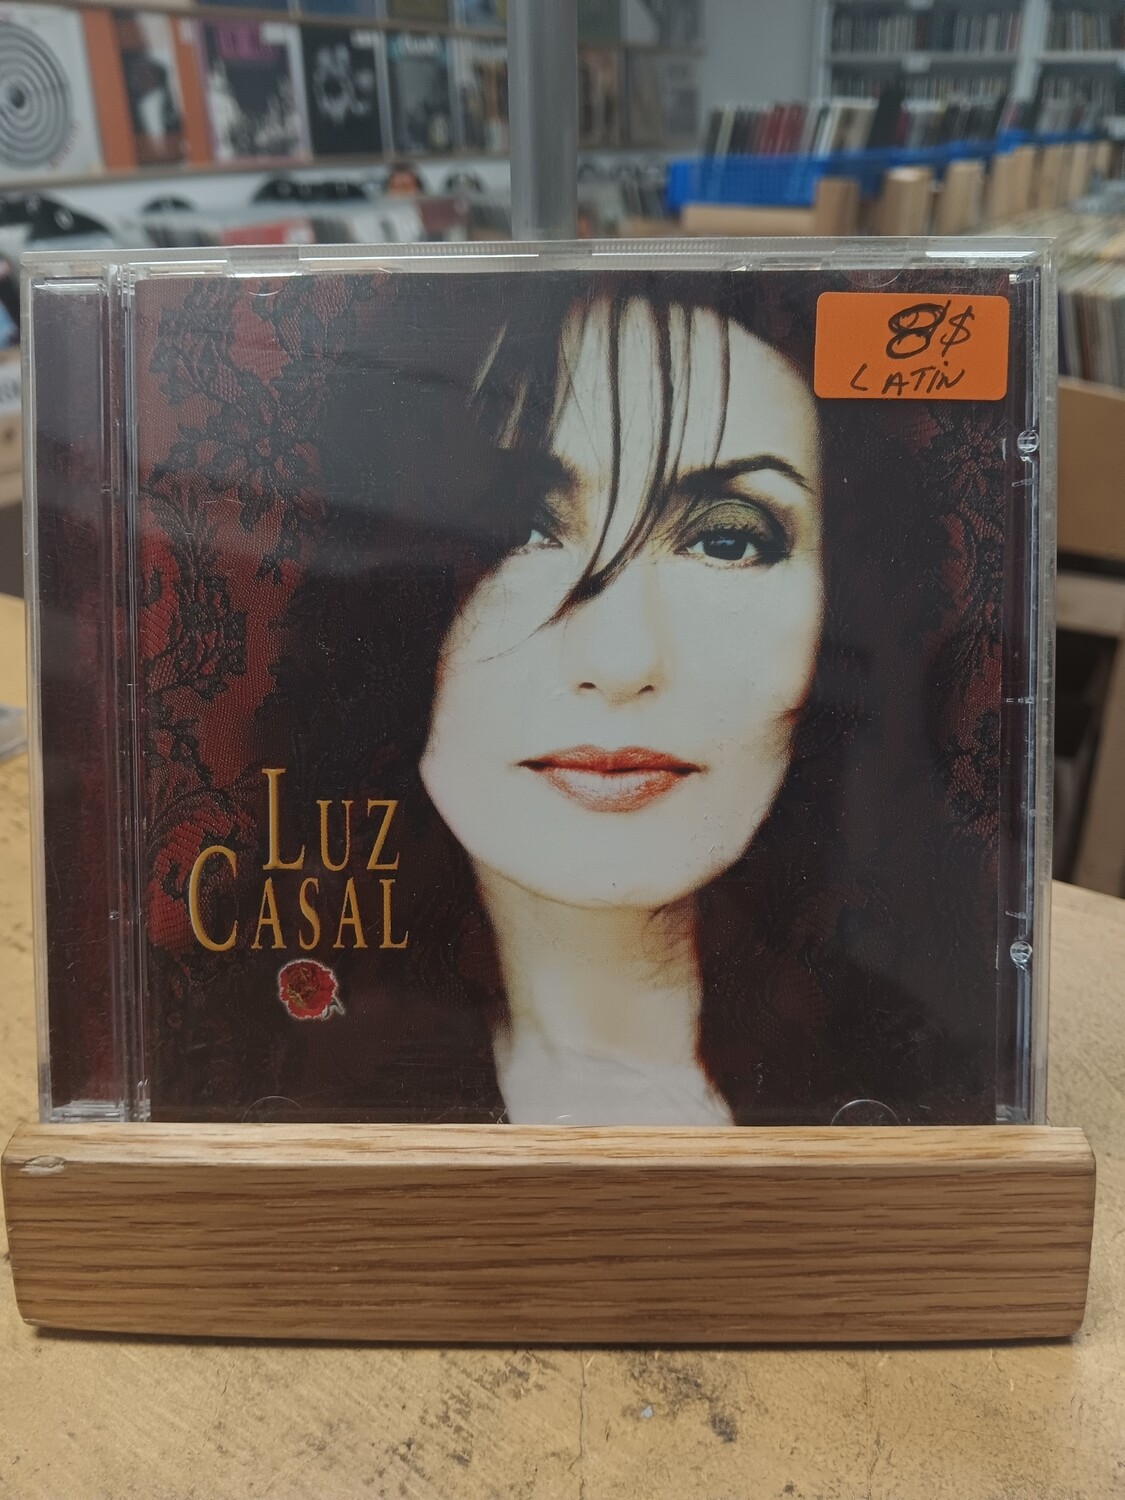 LUZ CASAL - Luz Casal (CD)